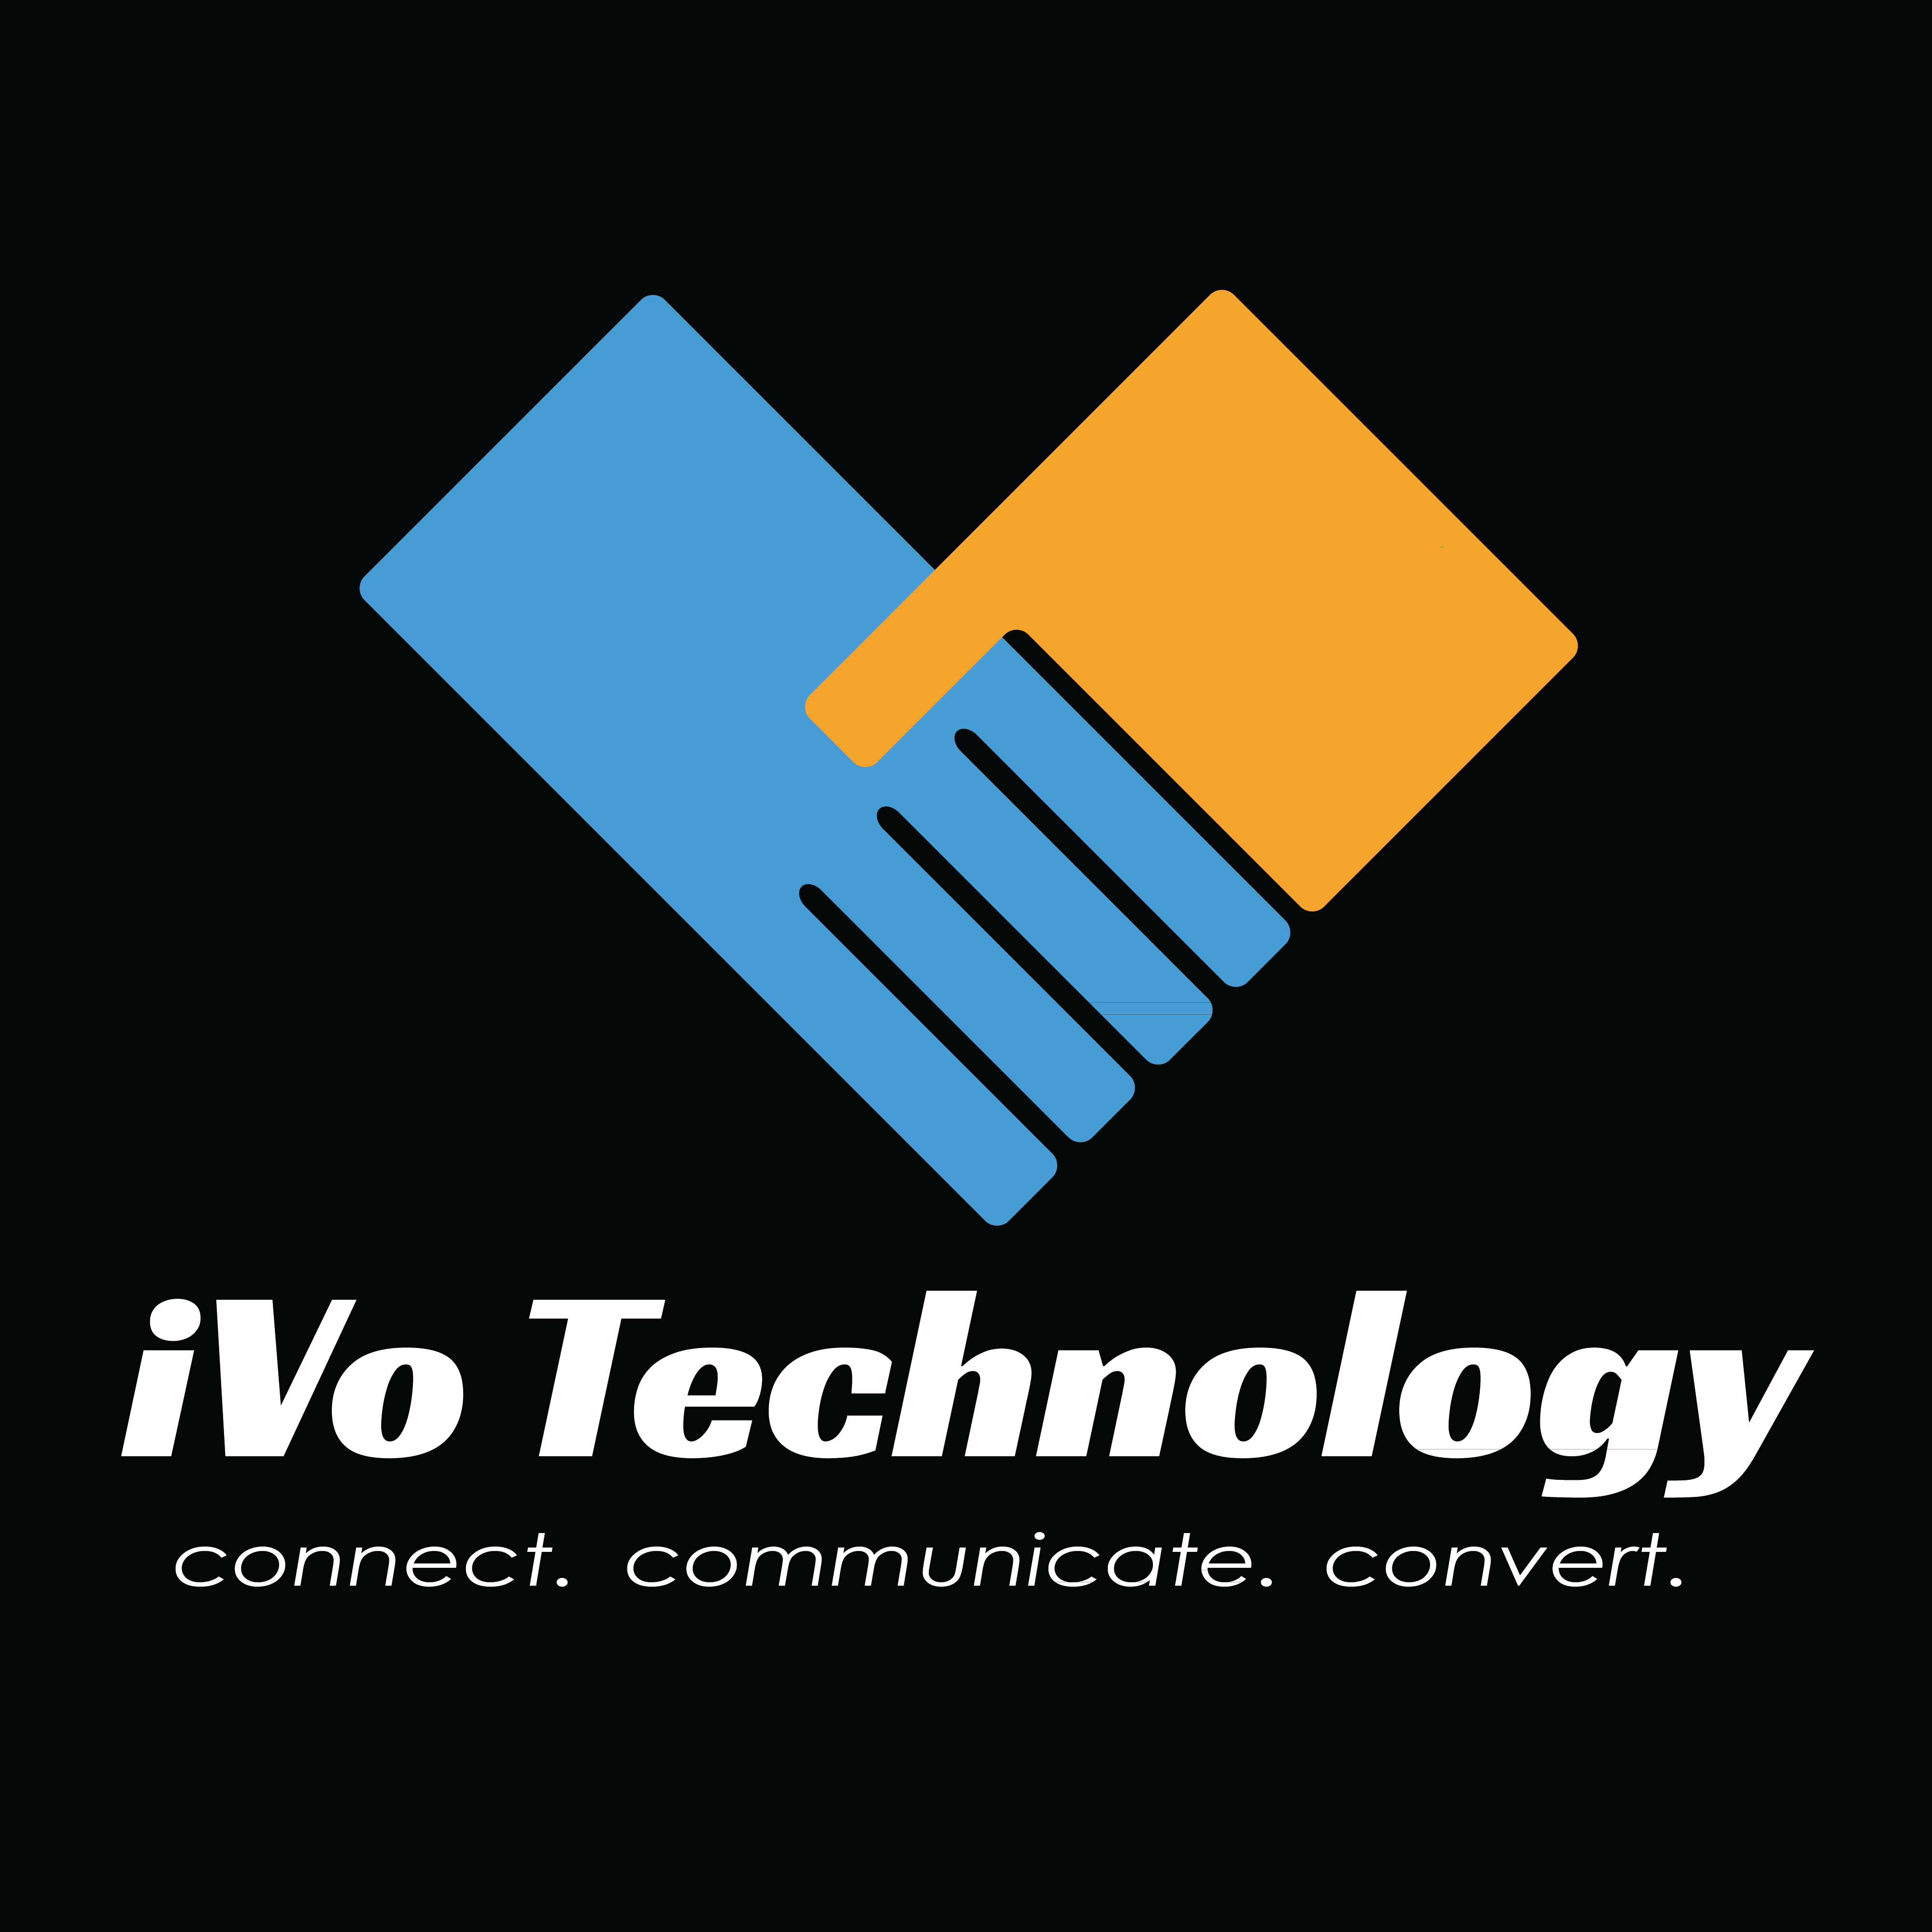 iVo Technology